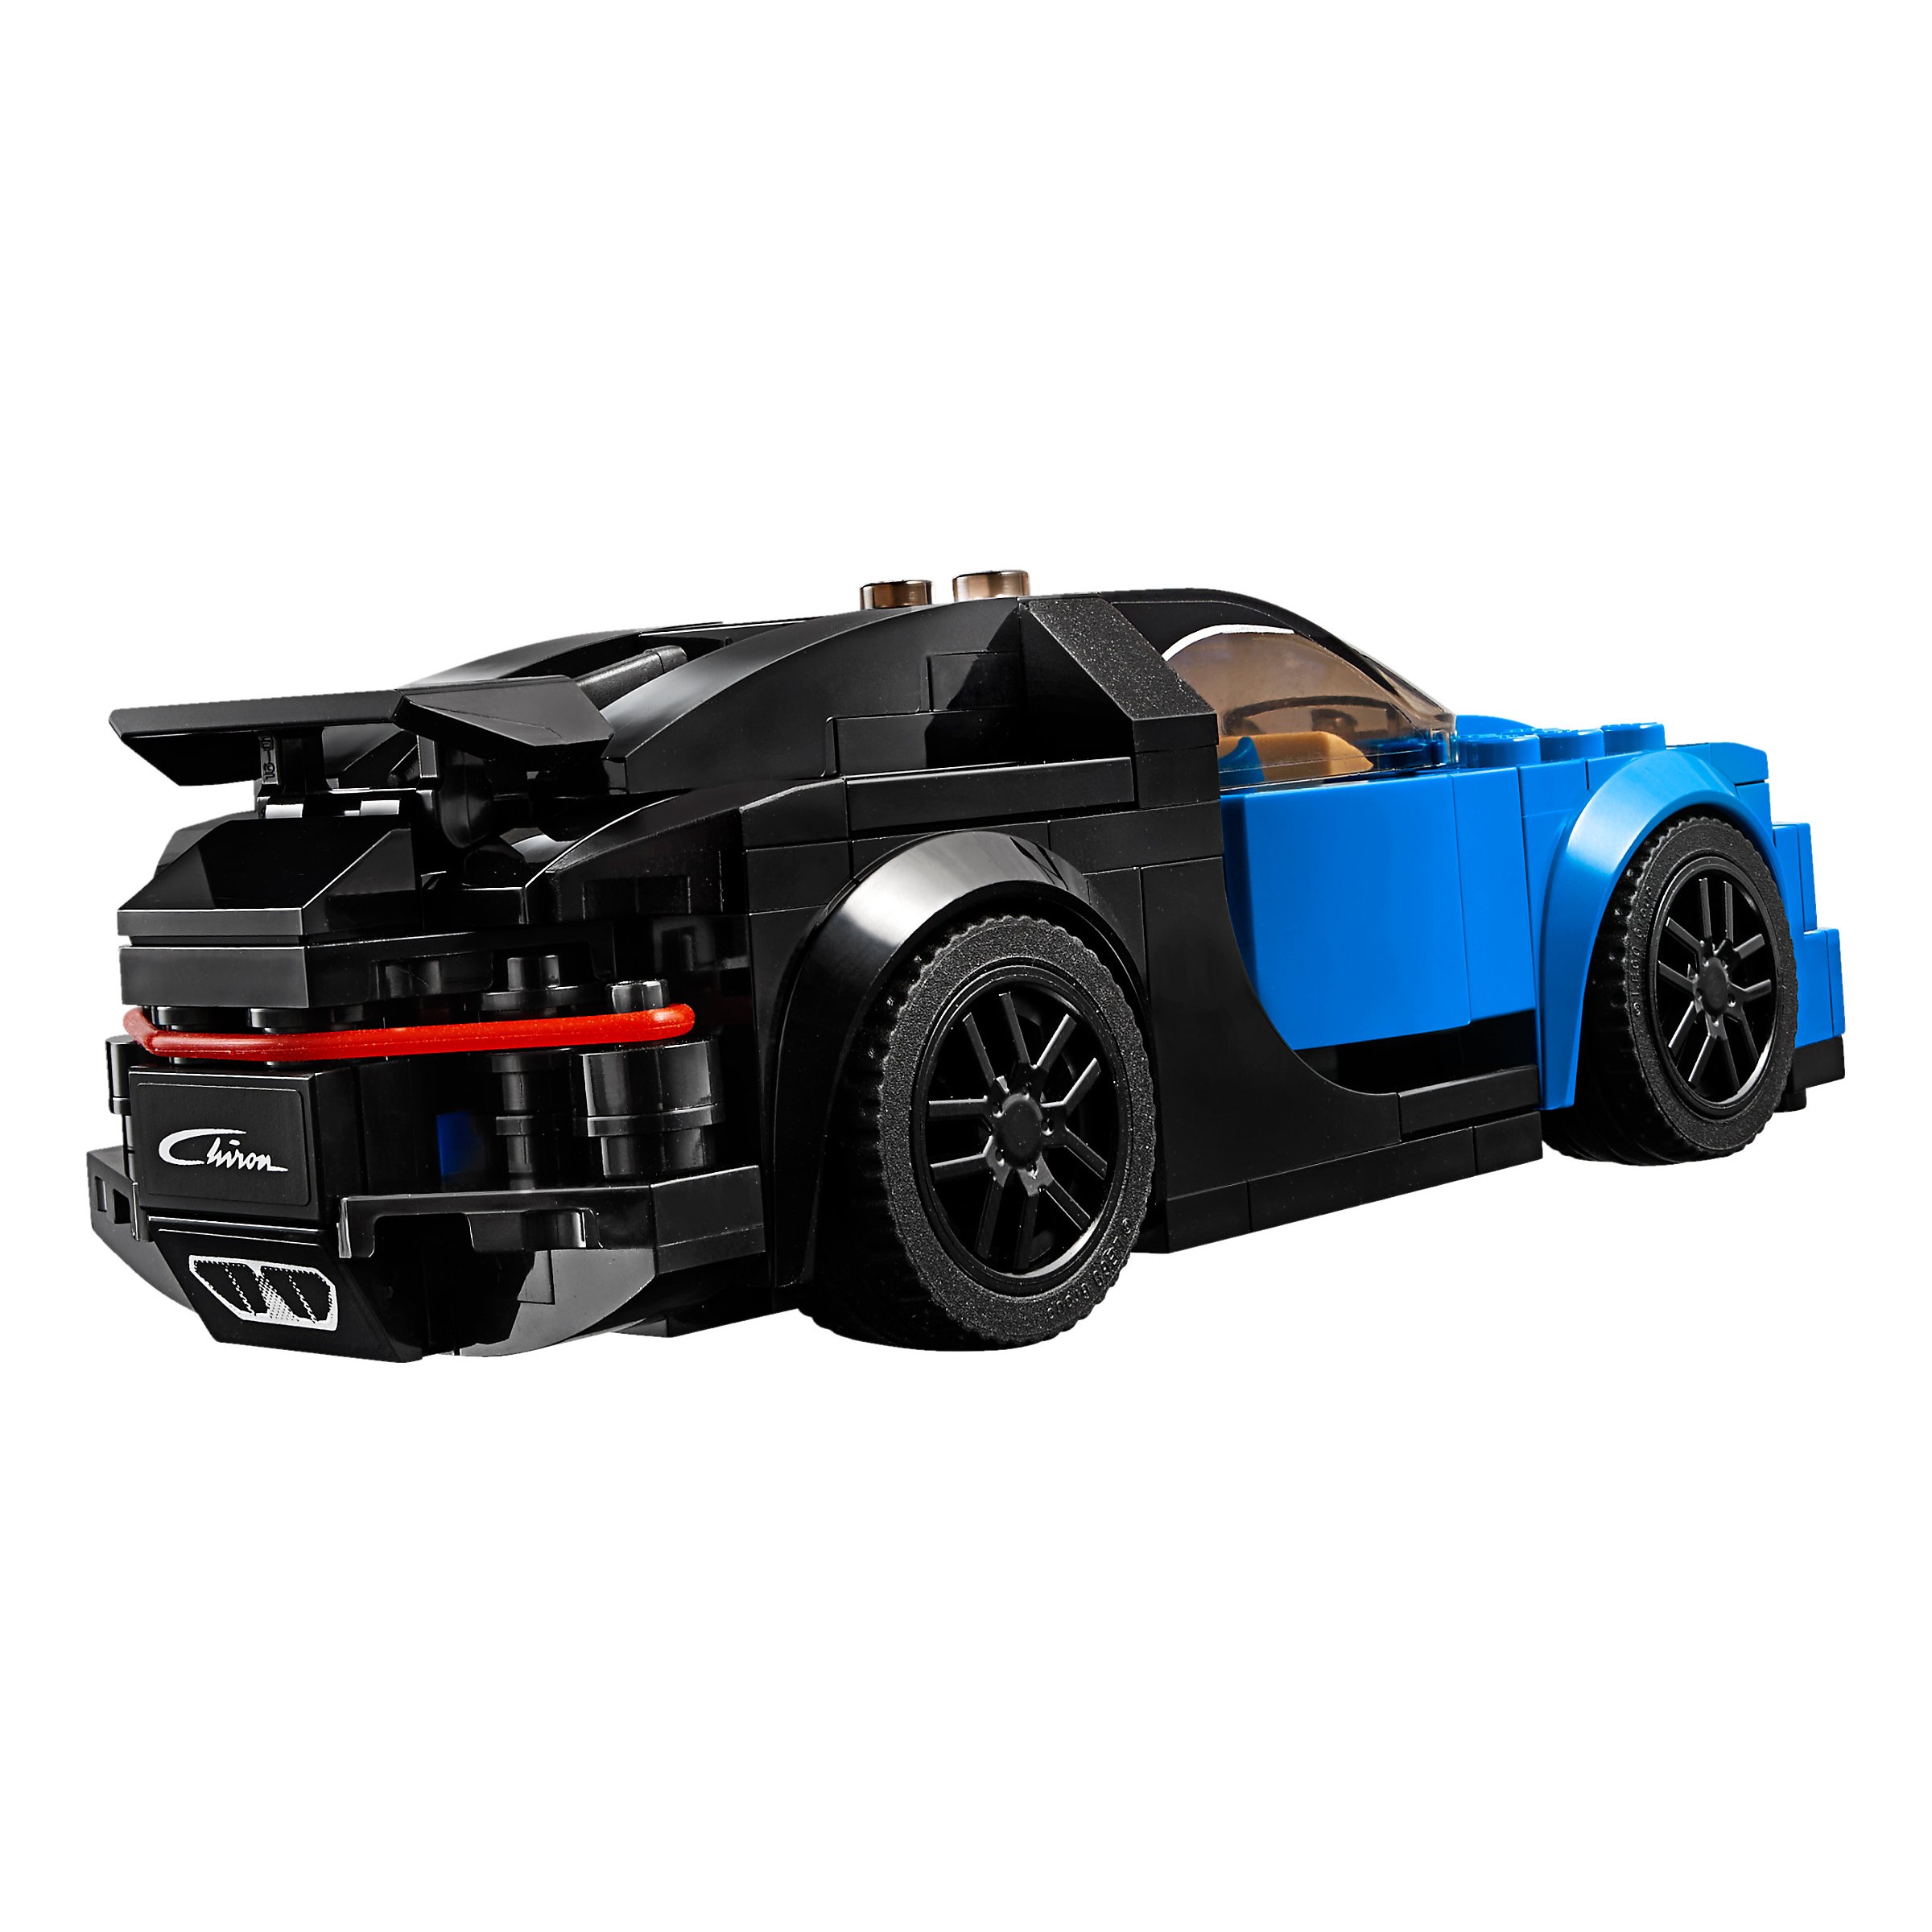 Lego Speed Champions 75878 Bugatti Chiron